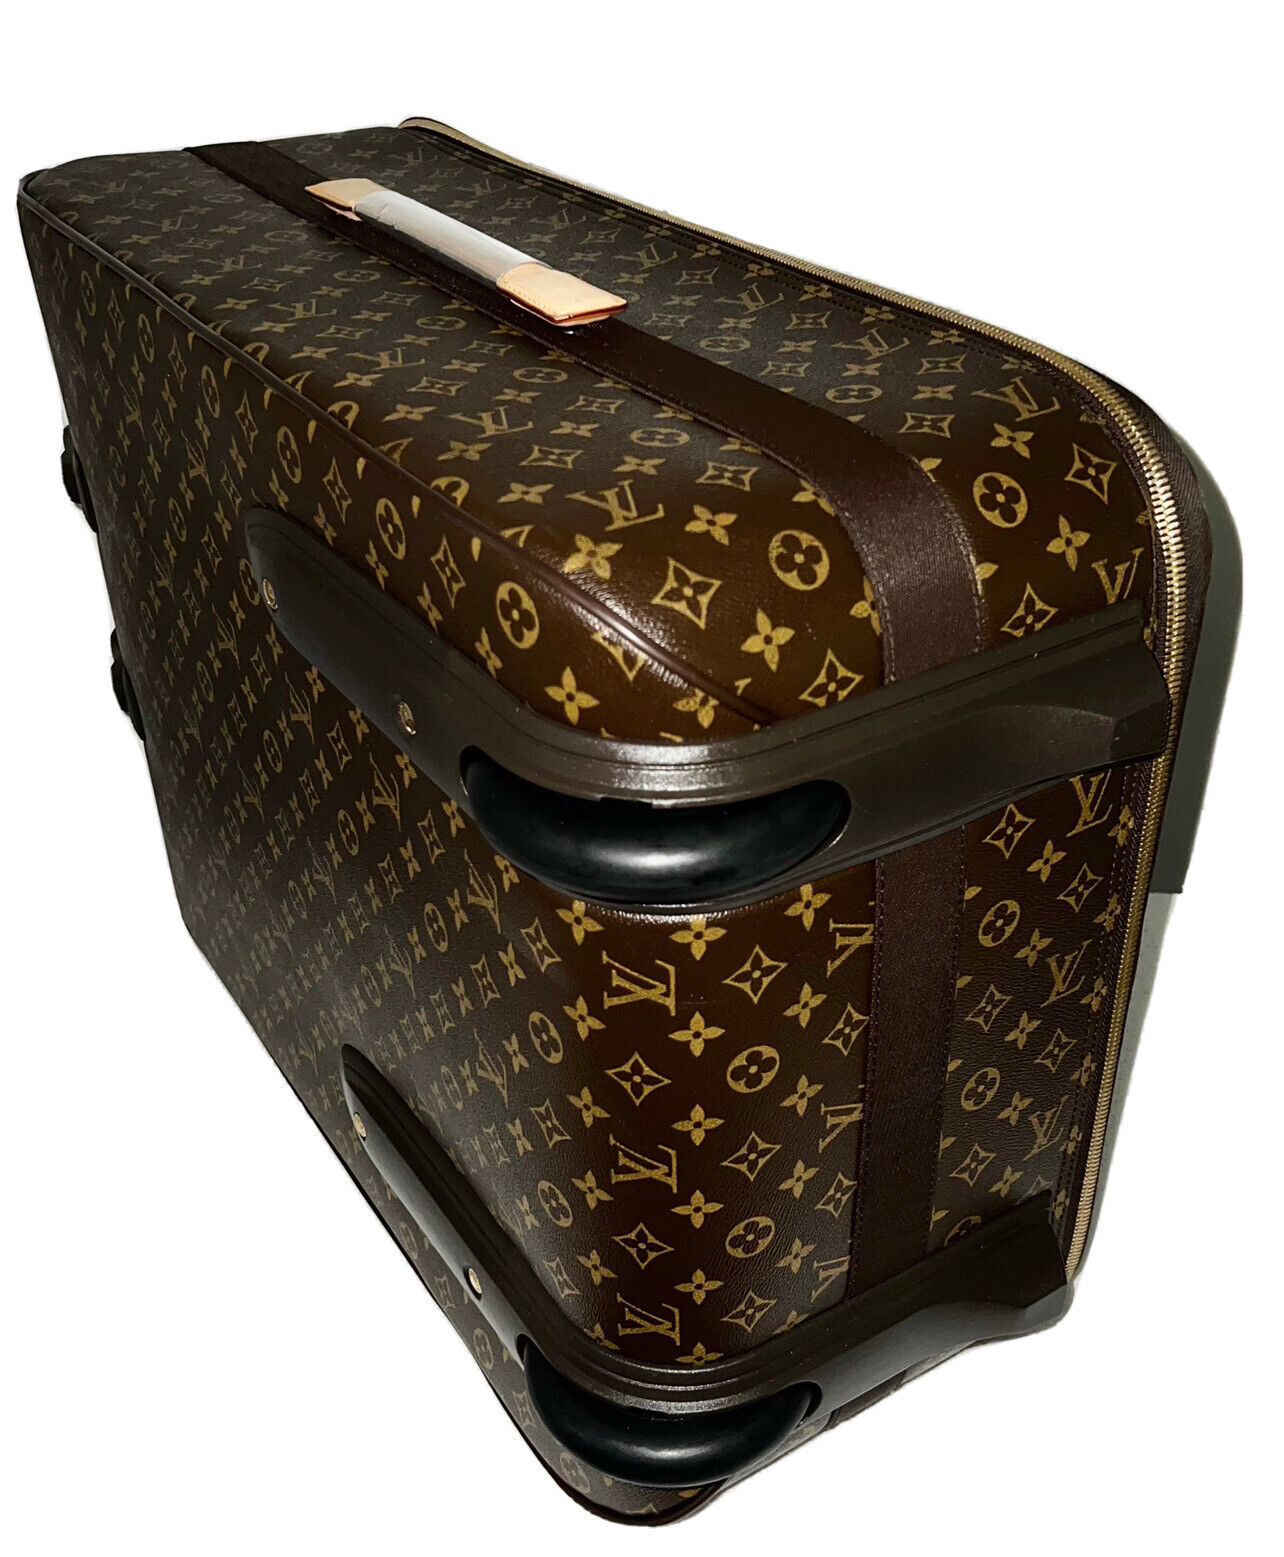 Louis Vuitton Pegase 70 Monogram Luggage Bag  w/ XL Garment Insert 🇫🇷